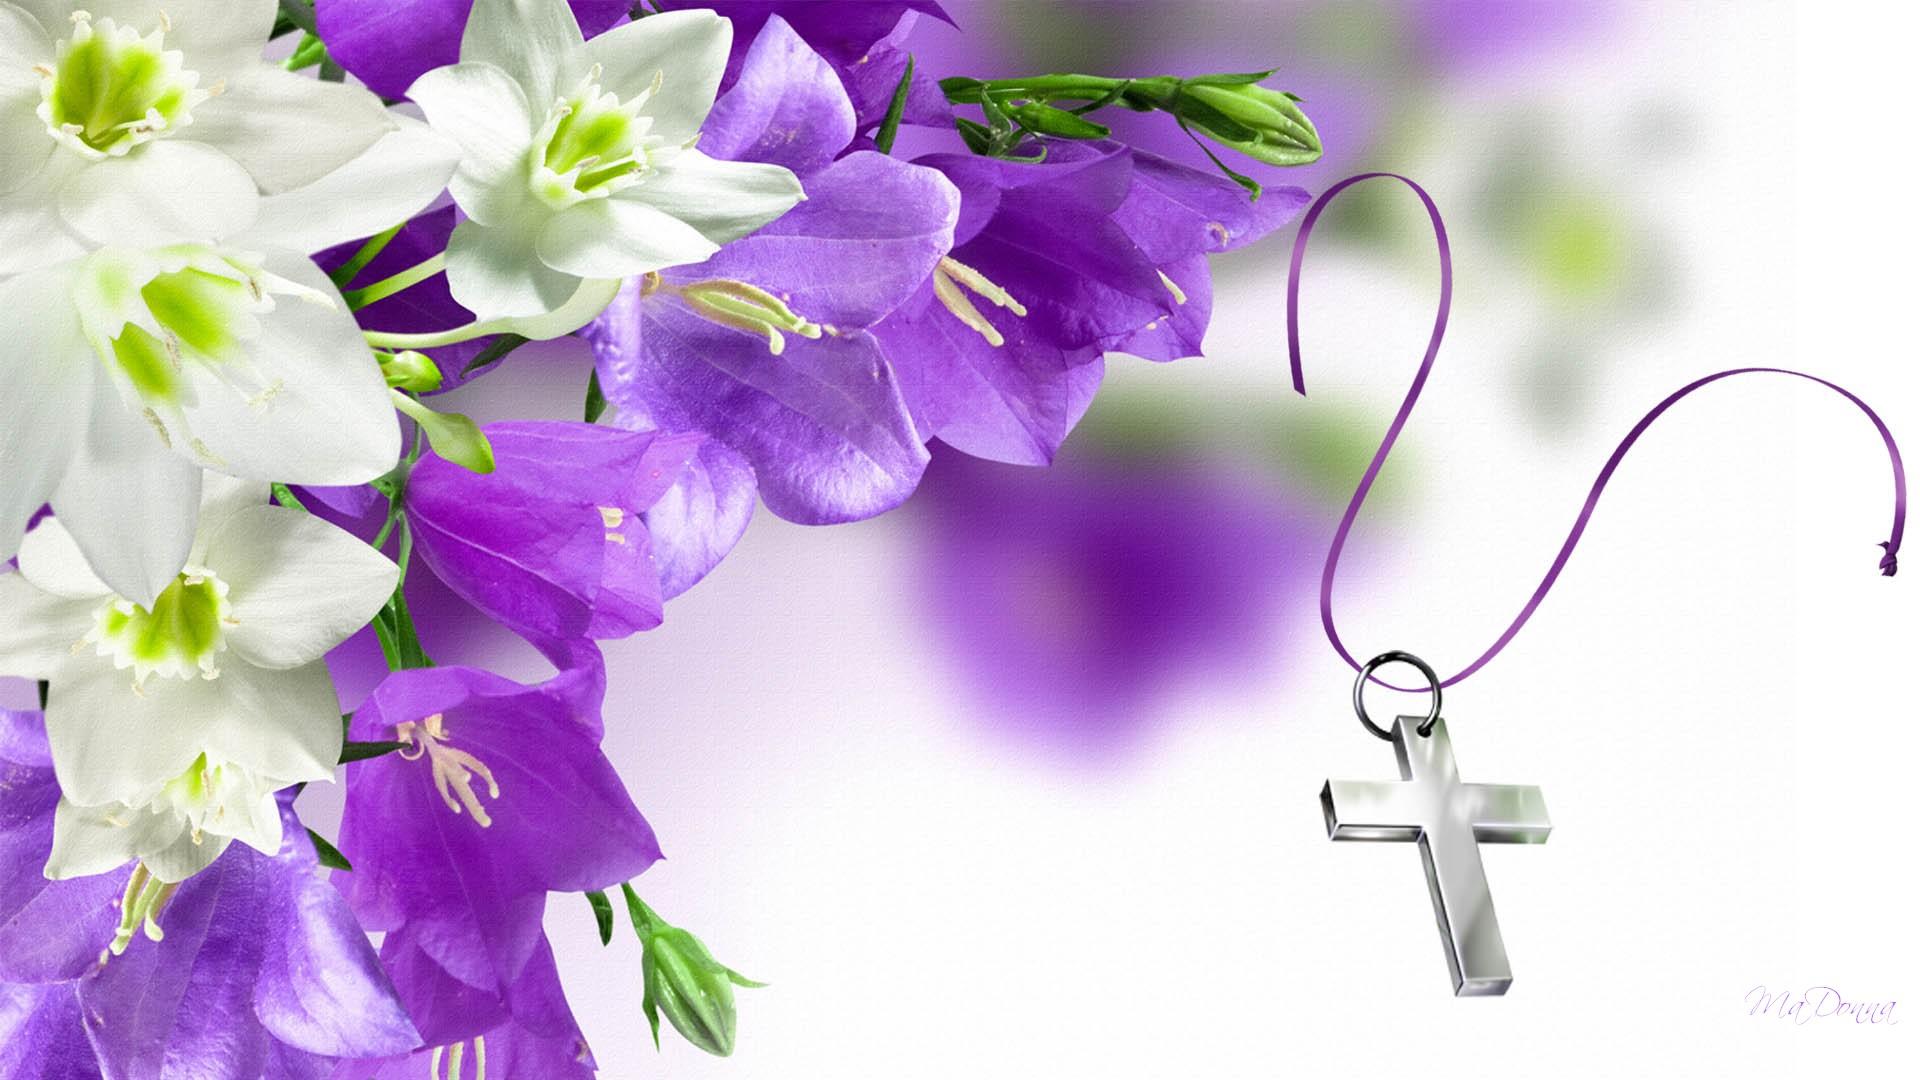 740149 descargar imagen cruz, día festivo, pascua, flor, flor purpura, religioso, plata, flor blanca: fondos de pantalla y protectores de pantalla gratis